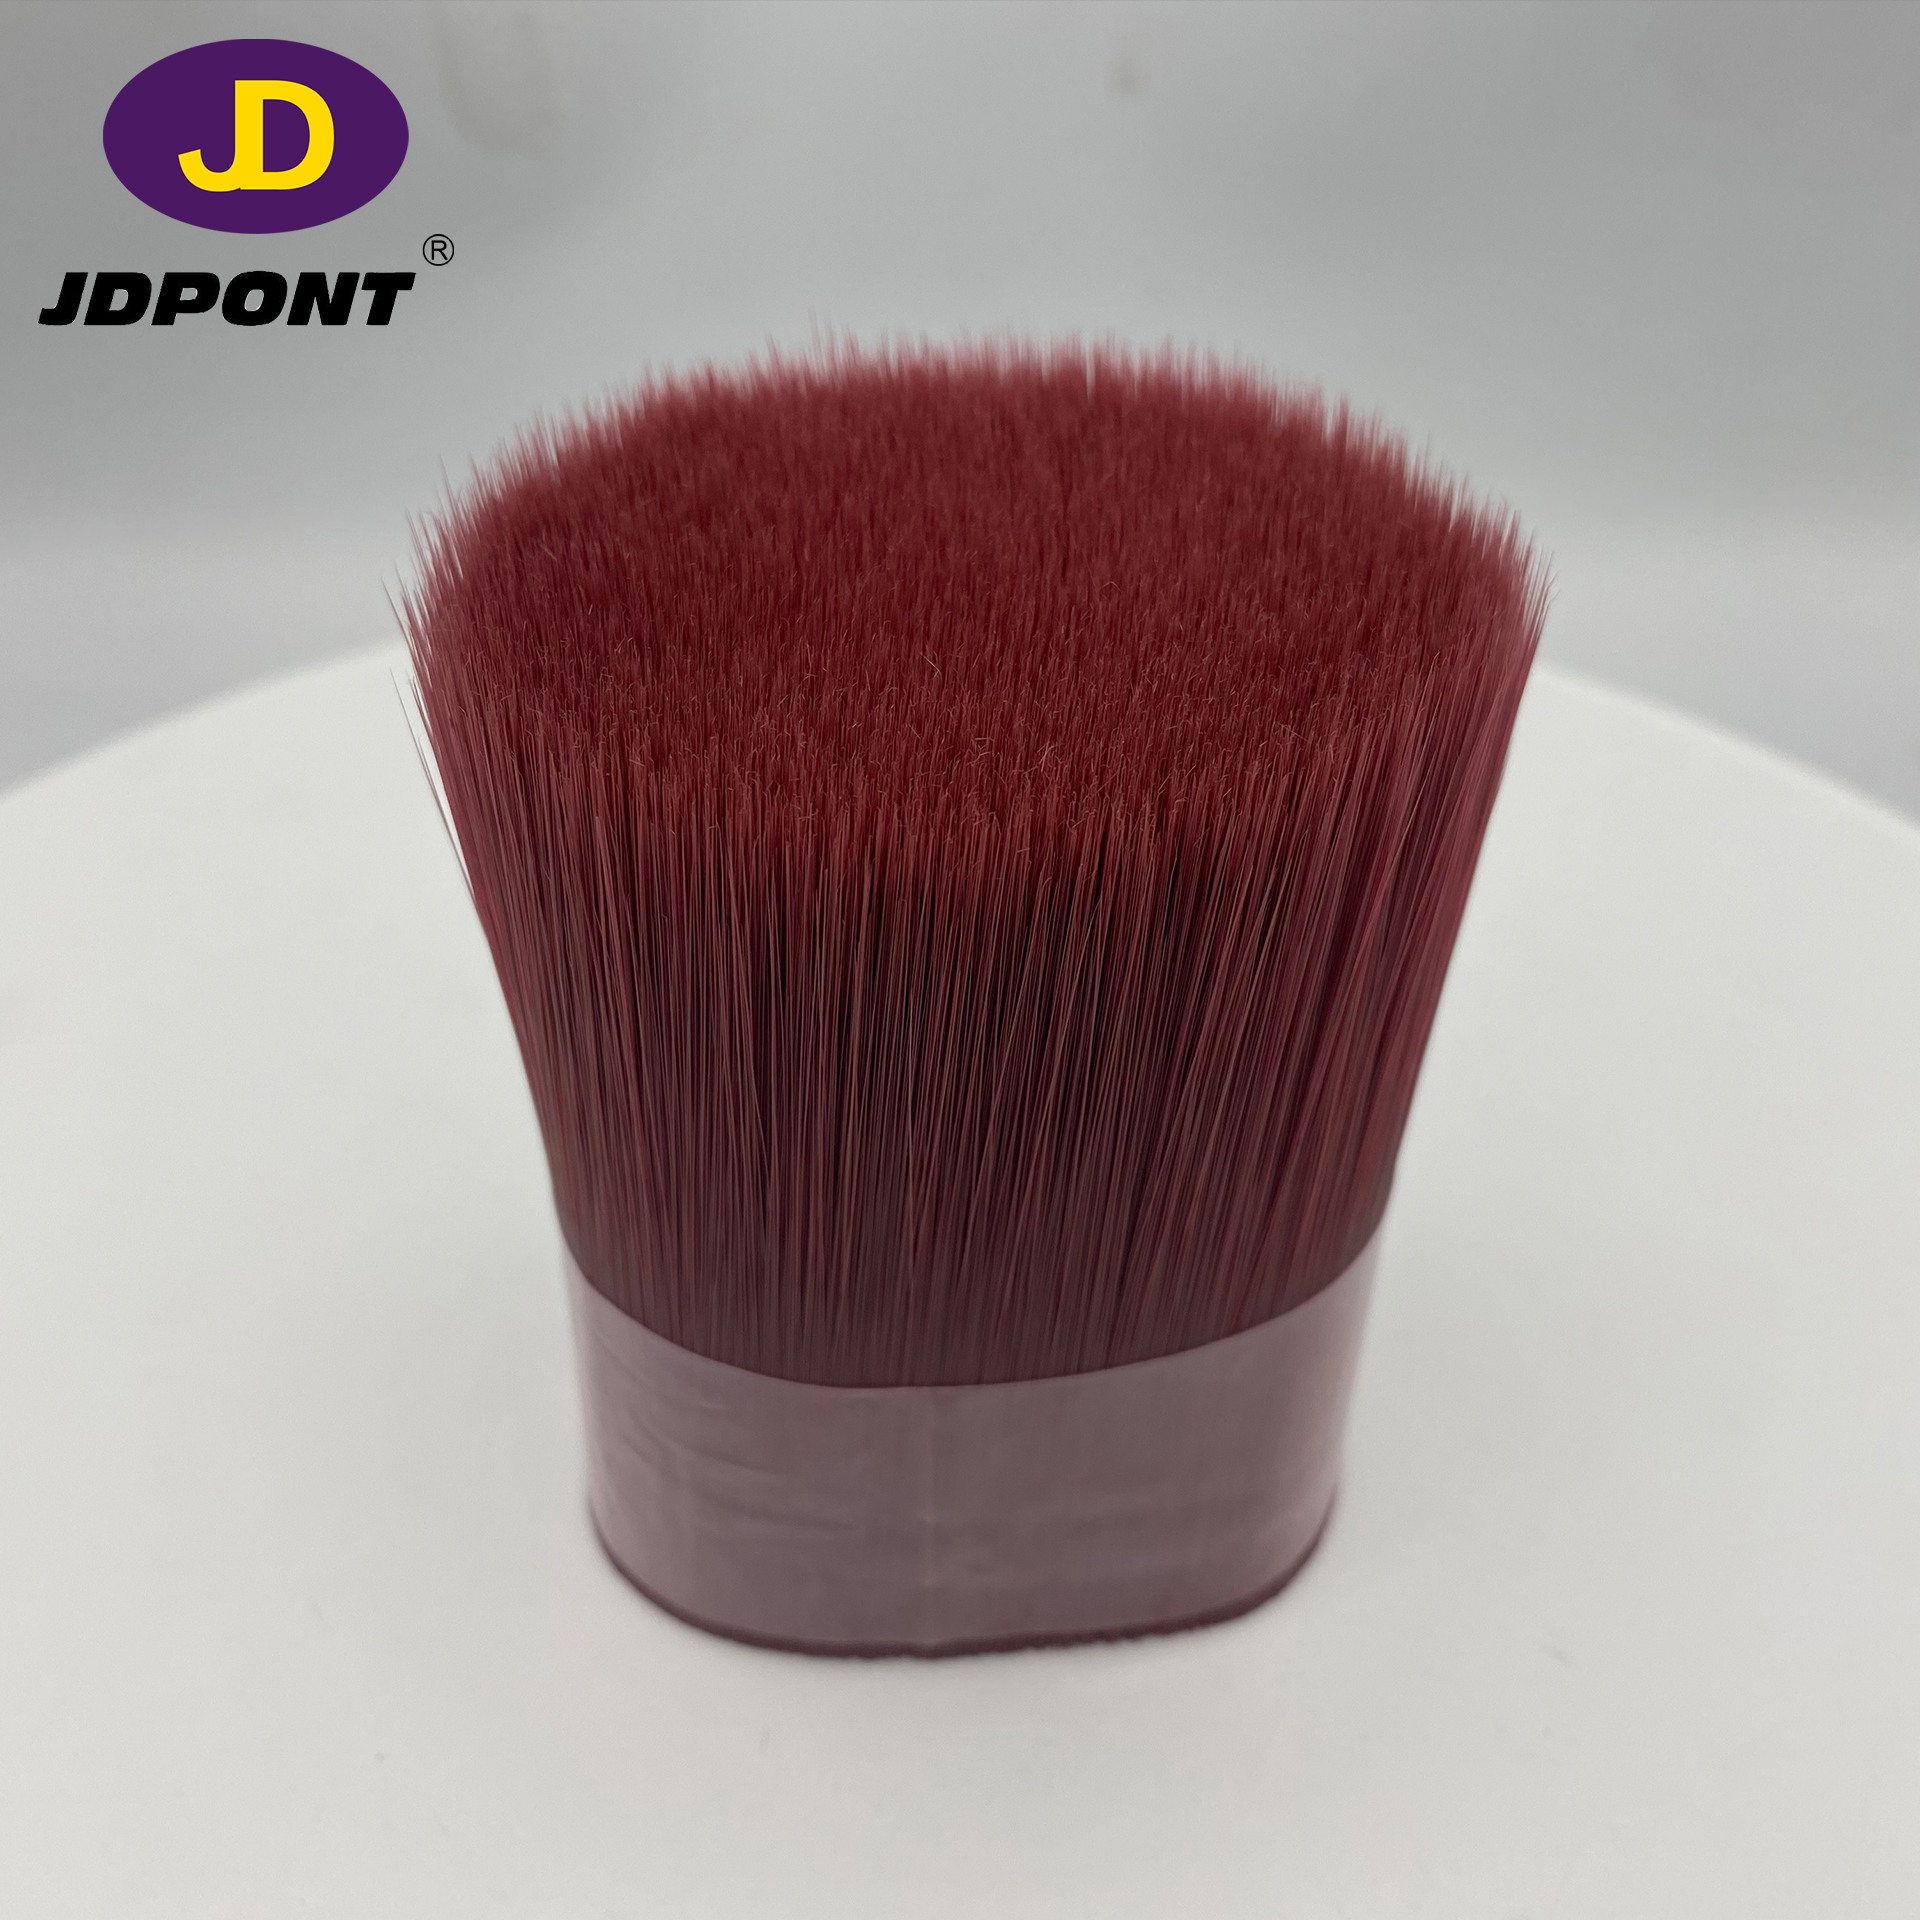 Filamento cónico sólido de color rojo oscuro JDSF (DR)